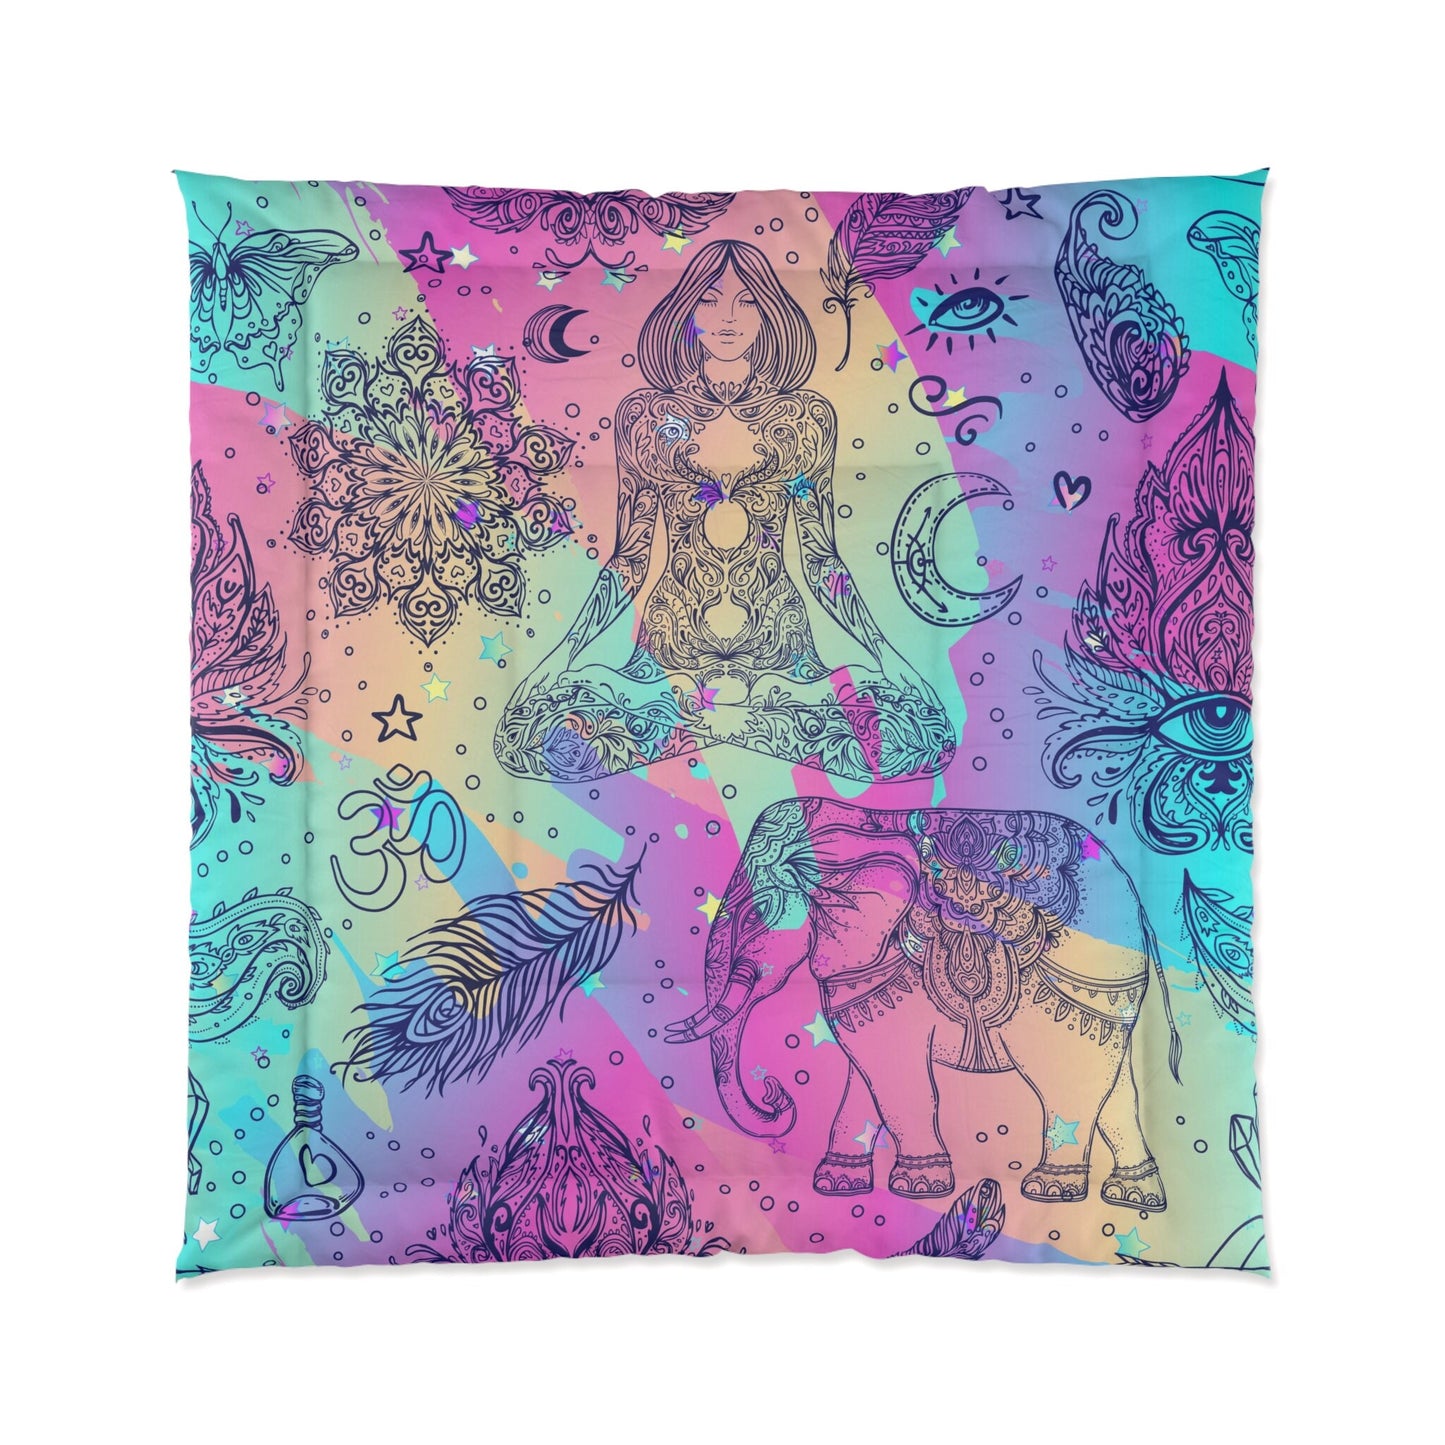 Boho Spiritual Comforter or Duvet Cover hippy bedding boho bedding spiritual comforter yoga comforter feather bedding elephant bedding